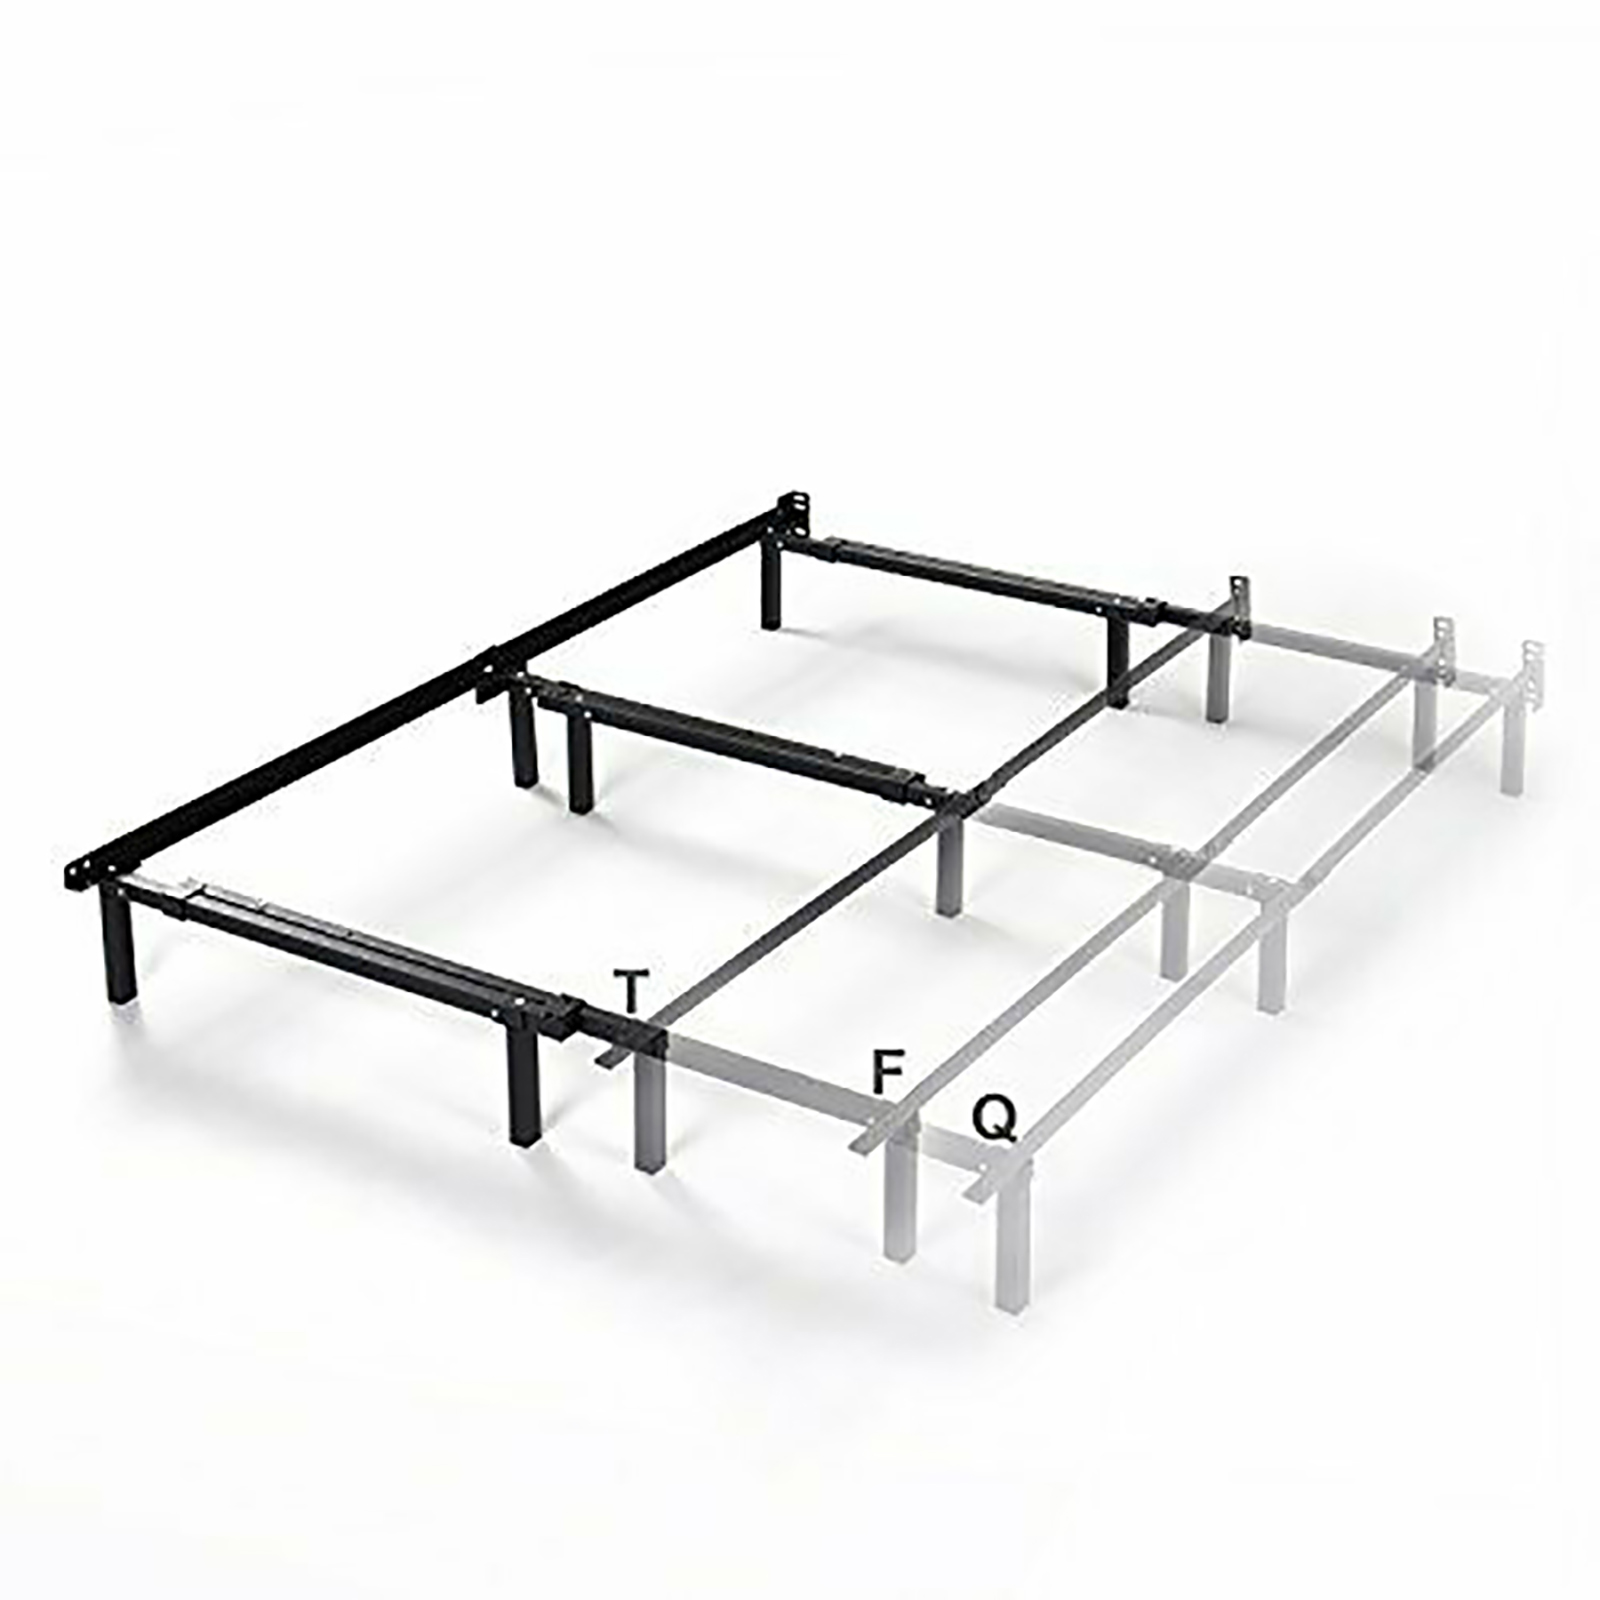 Zinus Compact Adjustable Steel Bed, Sears Metal Bed Frame